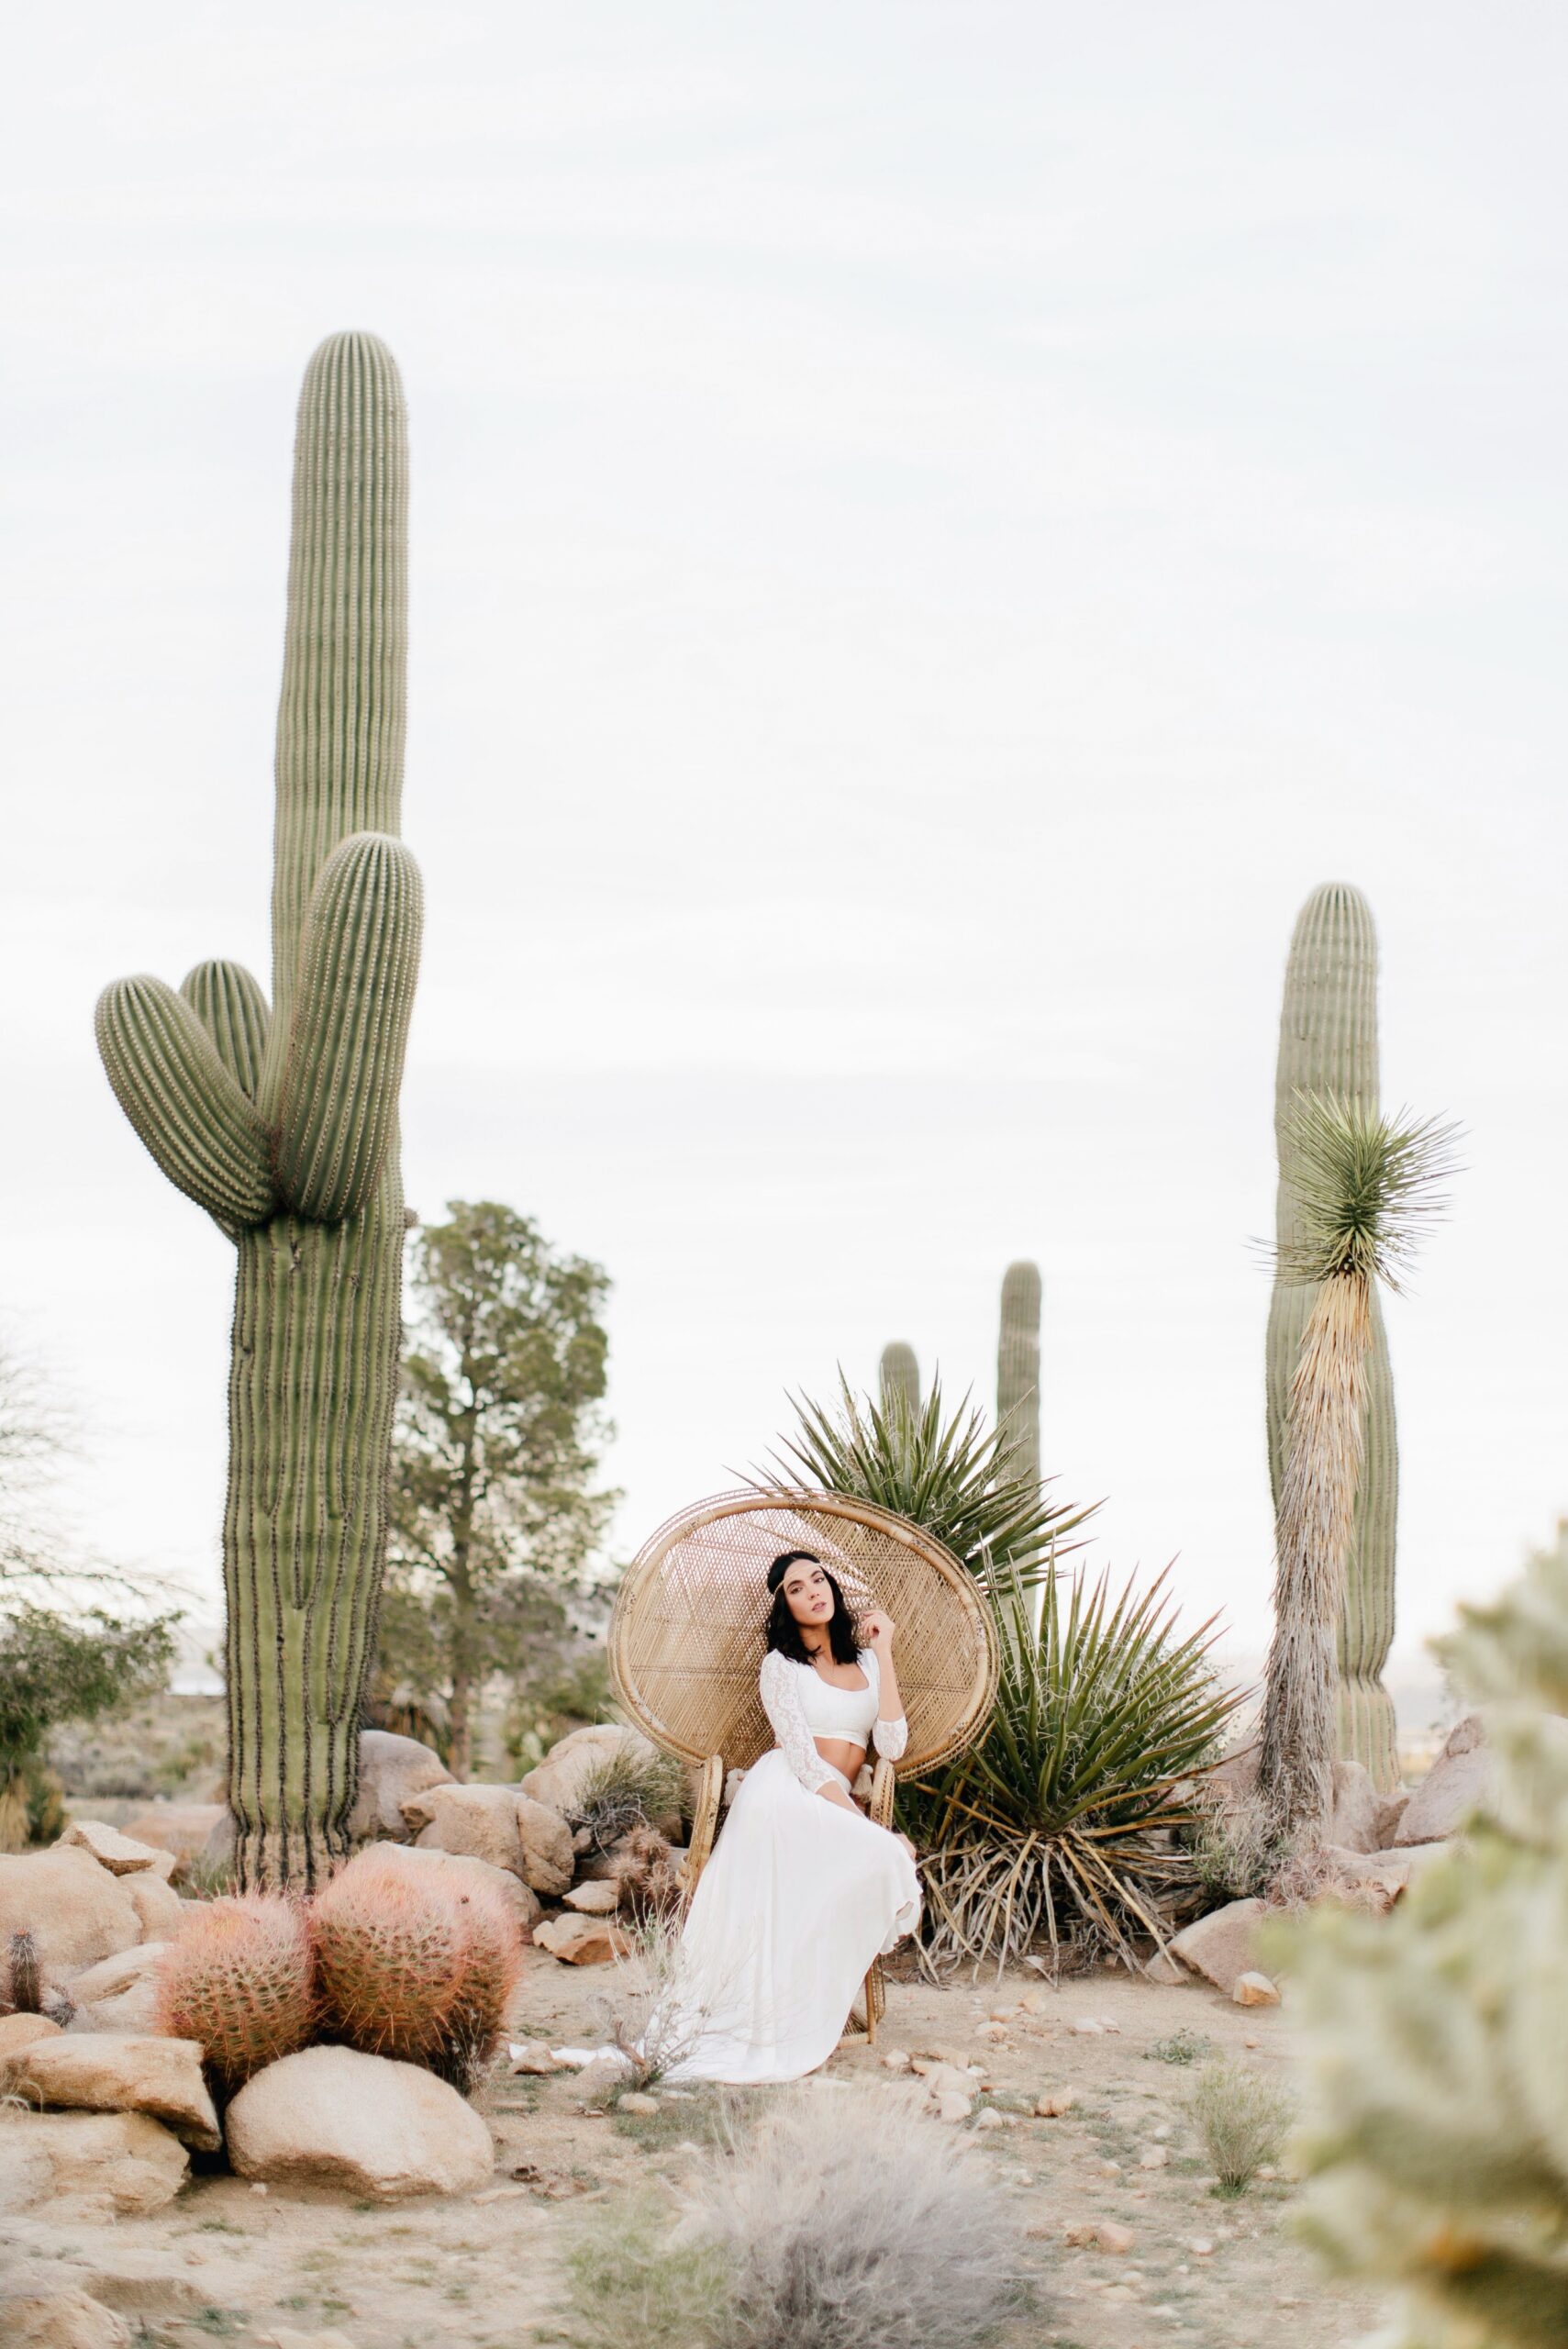 Bride amongst cacti at a desert destination wedding